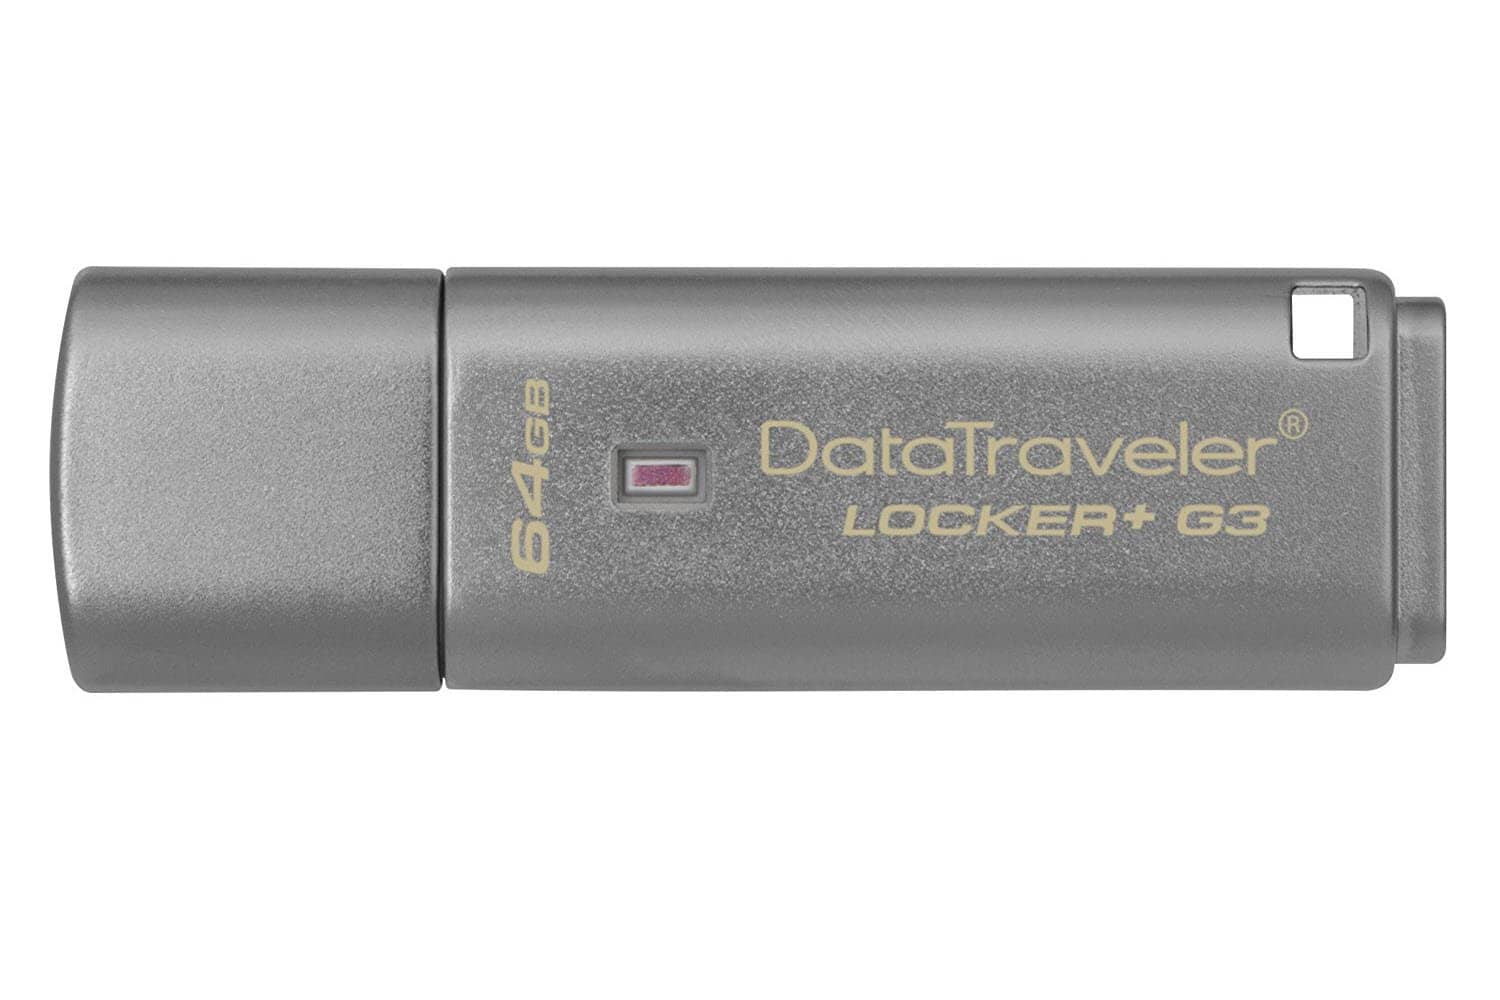 Kingston Digital 64GB Data Traveler Locker + G3